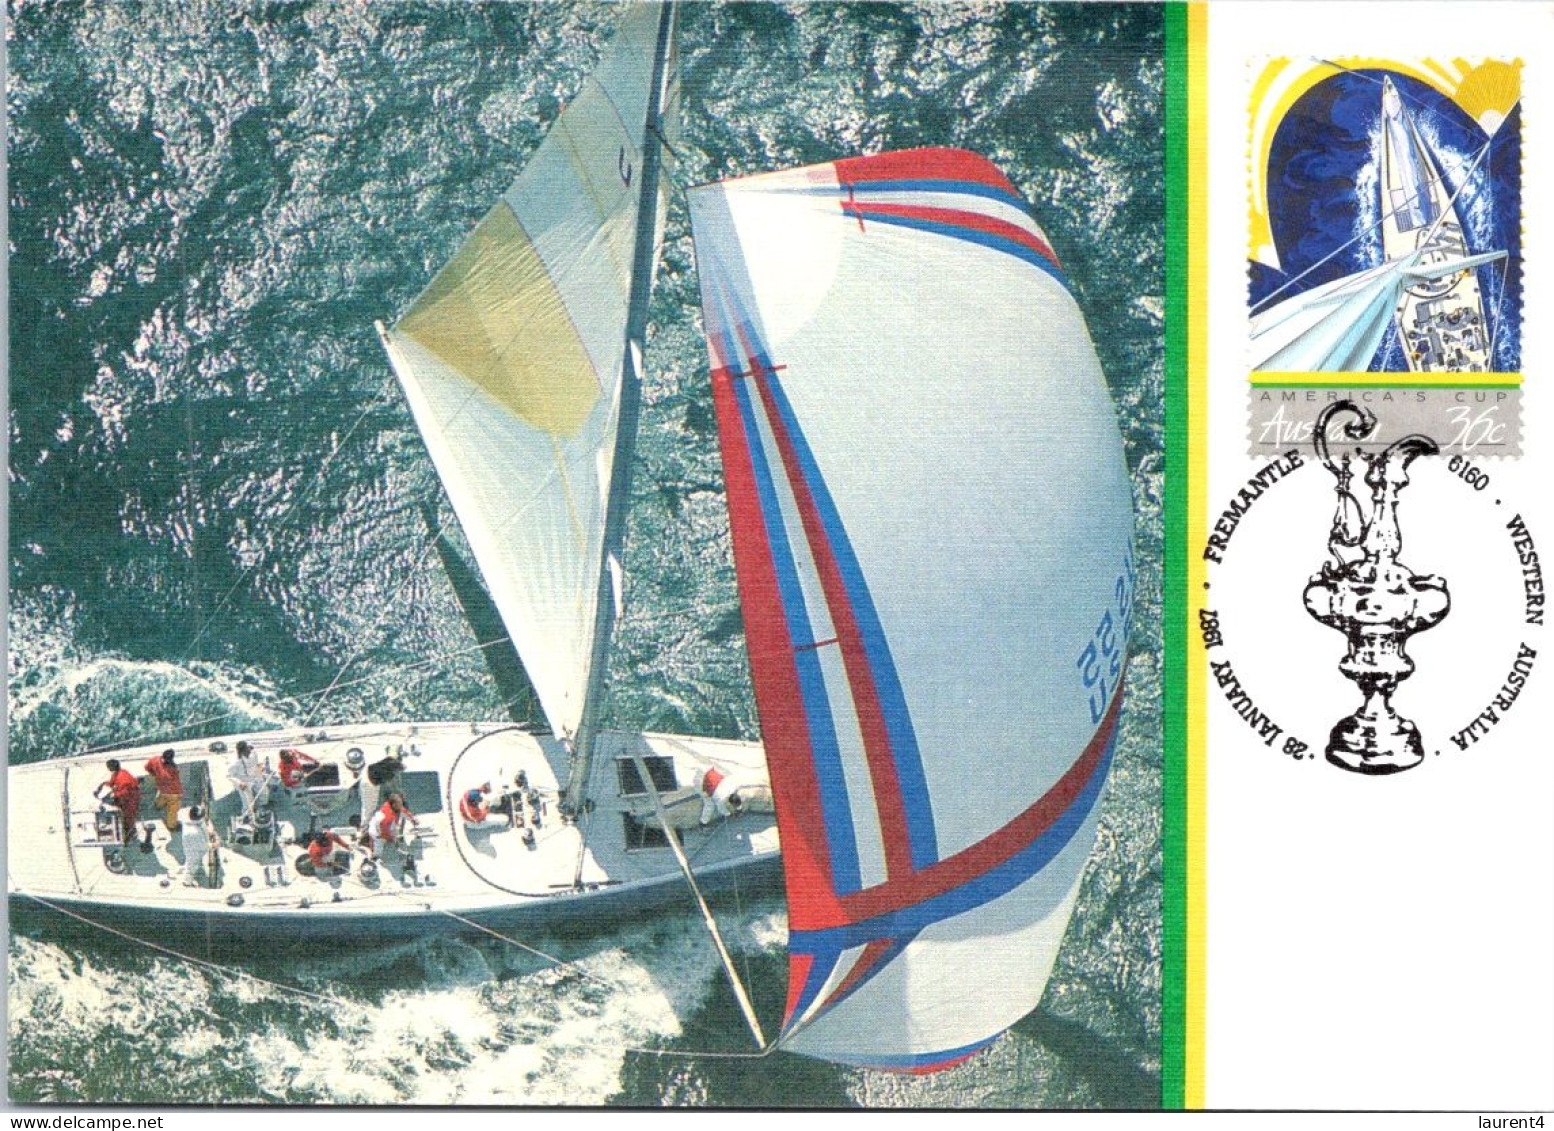 7-5-2024 (4 Z 30) Australia - America Cuo Triomph 1983 (sailing) 7 postcards